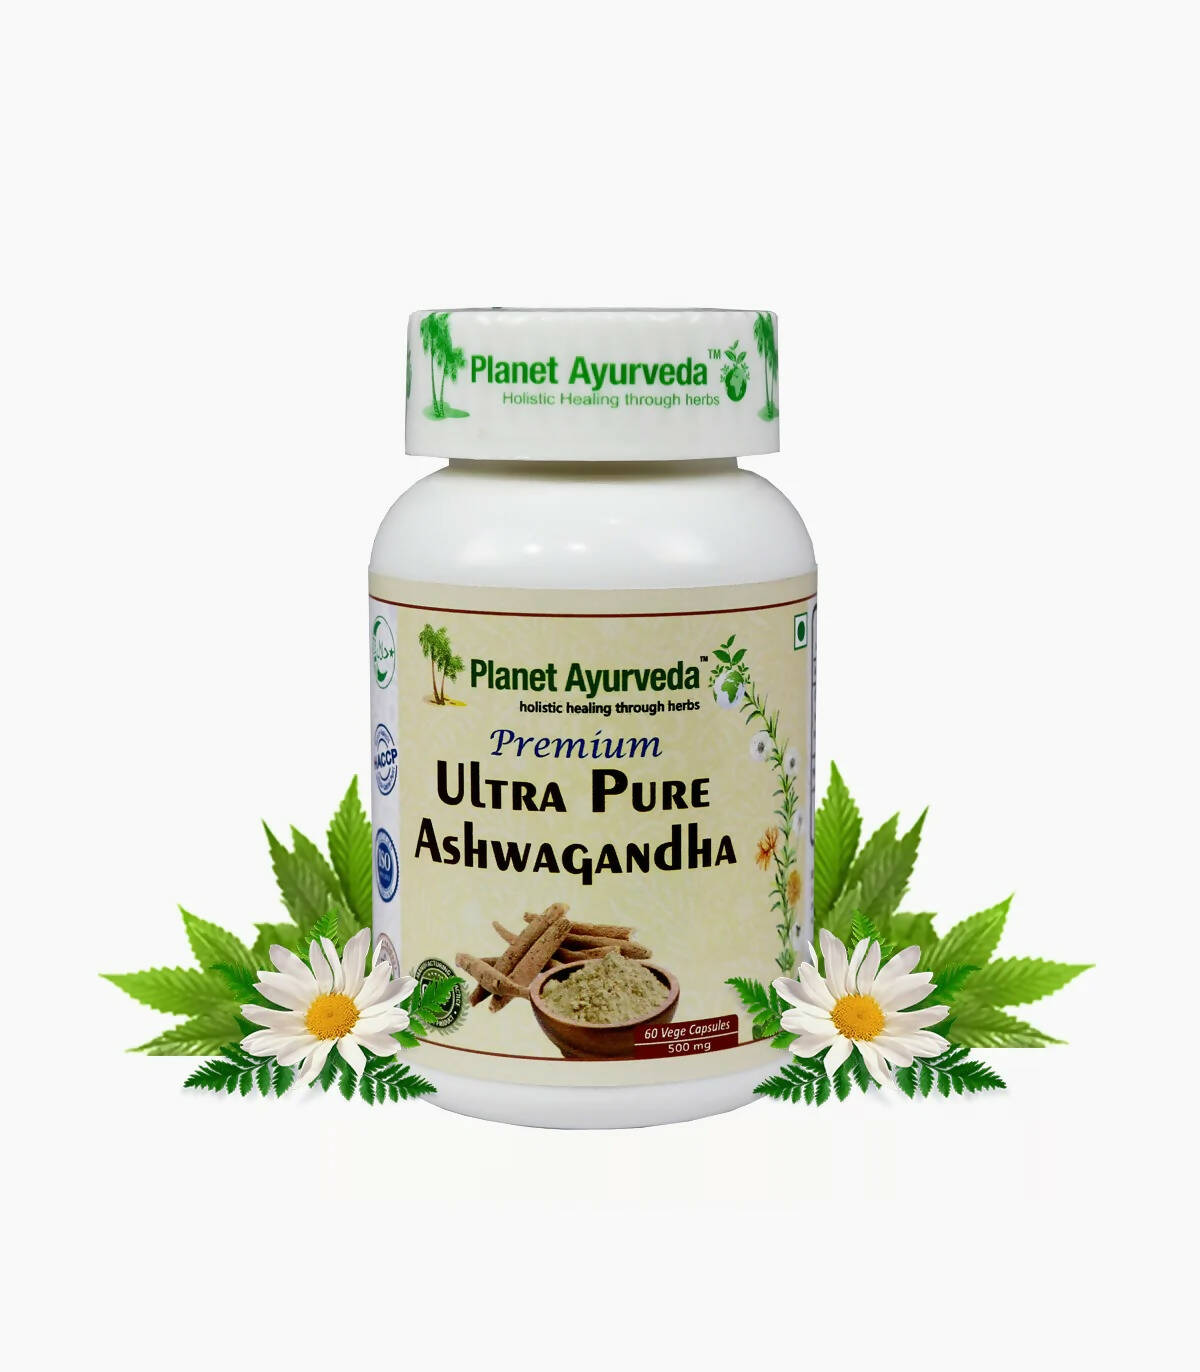 Planet Ayurveda Premium Ultra Pure Ashwagandha Capsules